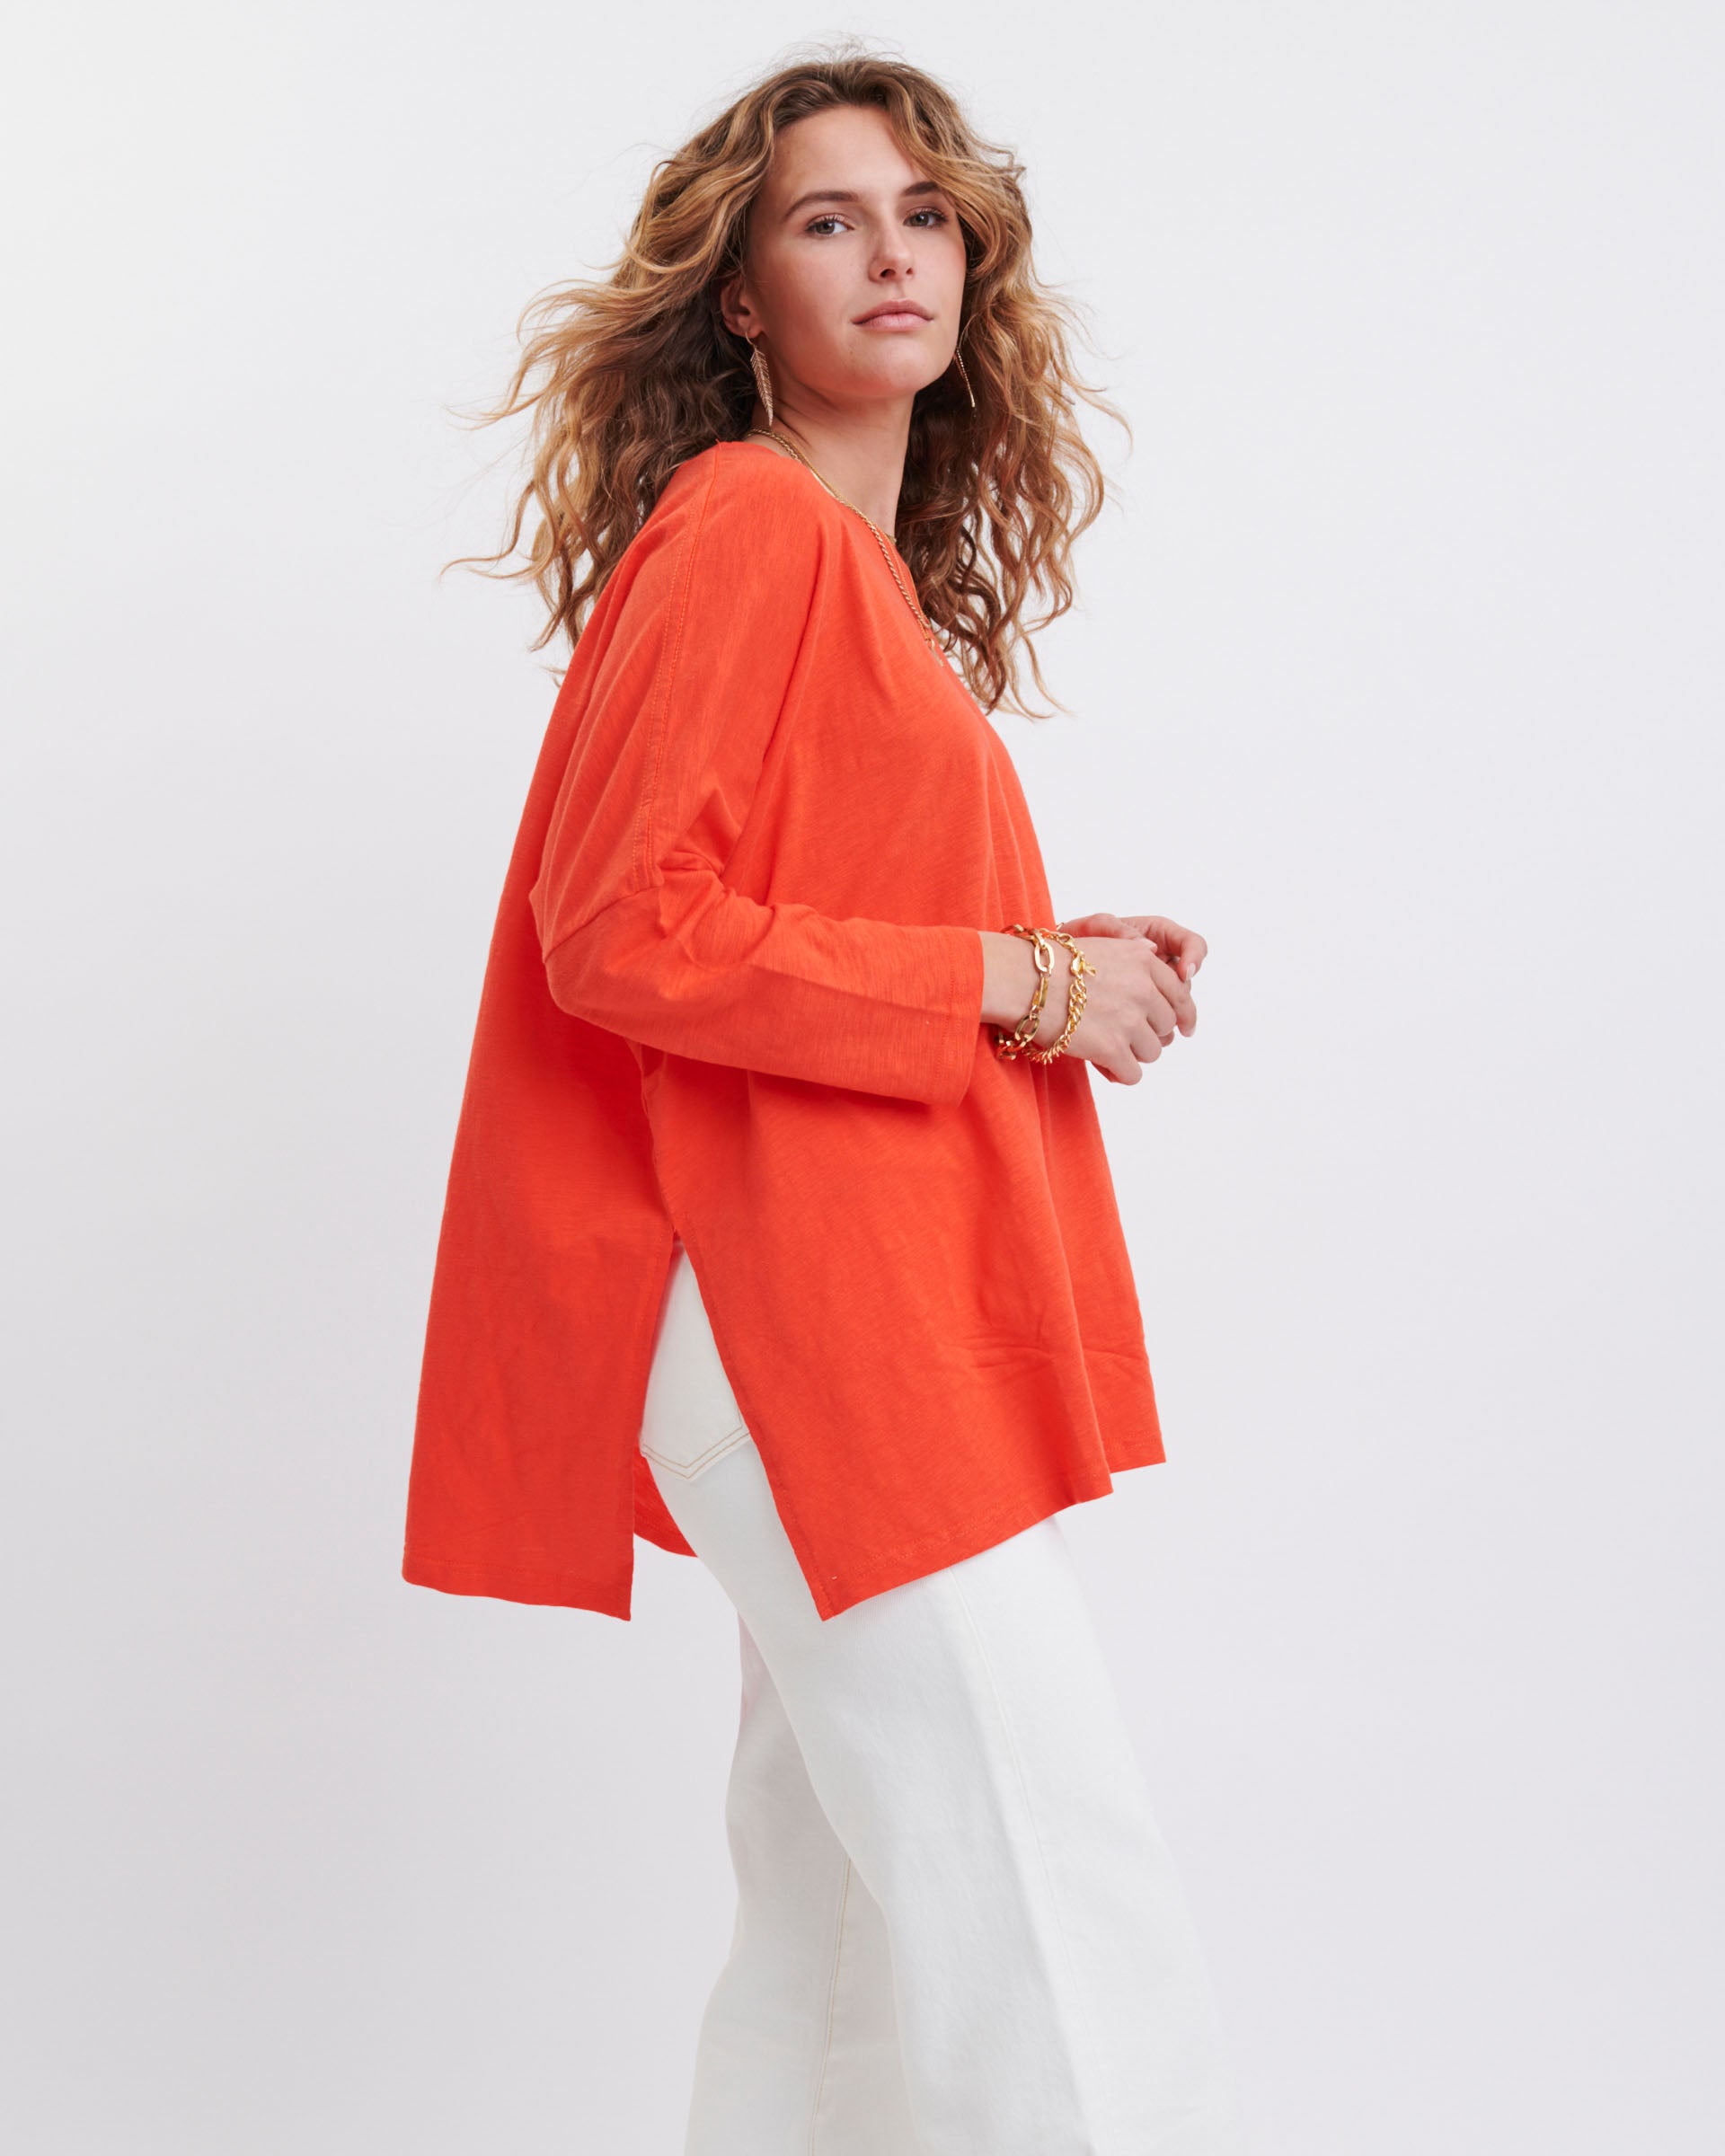 profile of woman wearing bright orange oversized mersea catalina slub tee